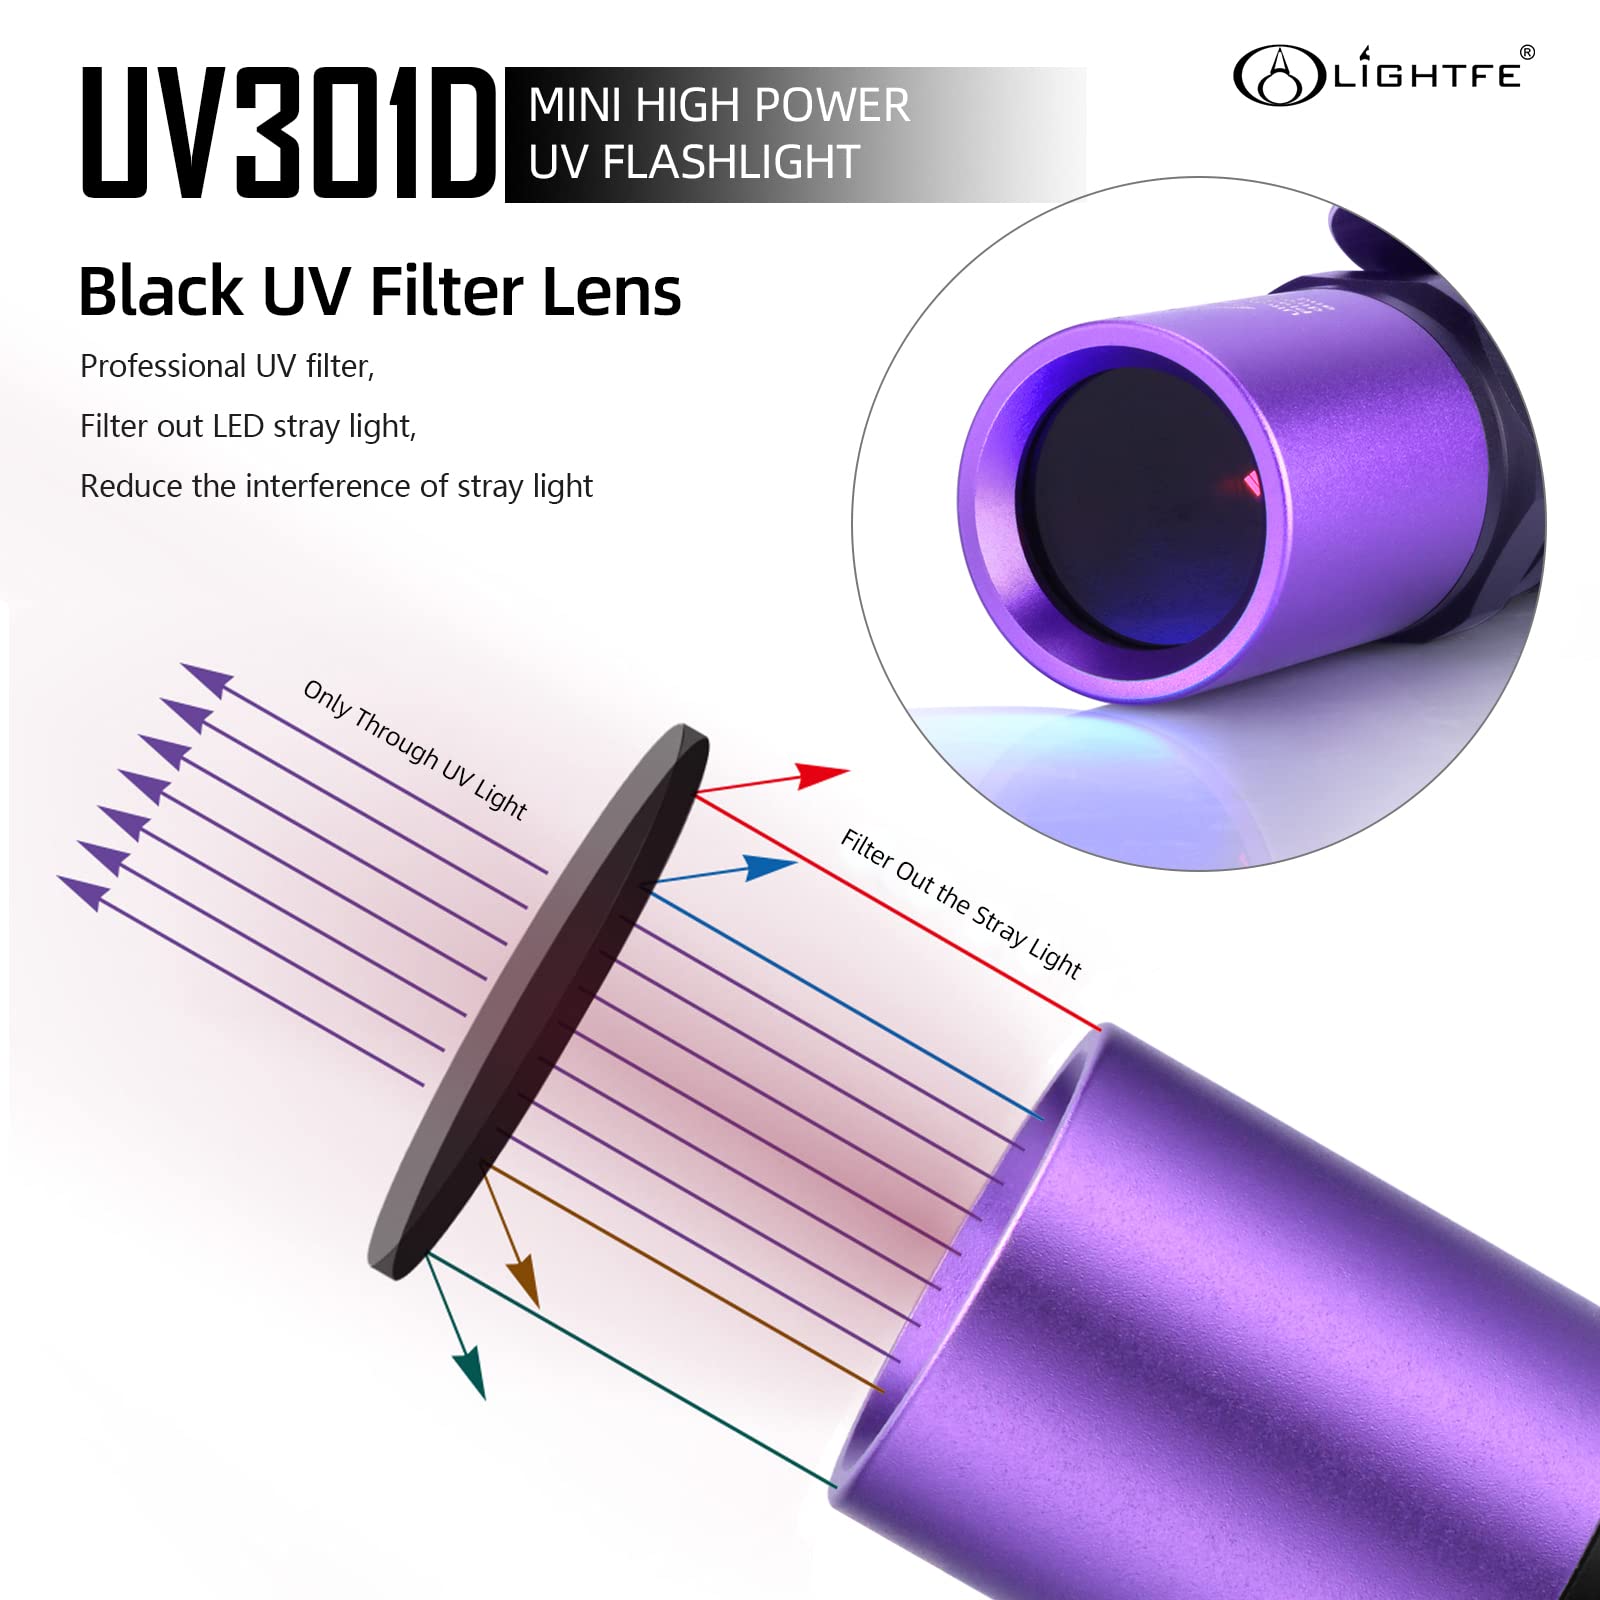 LIGHTFE Black Light UV Flashlight 365nm Blacklight UV301D with LG LED Source,Black Filter Lens, Max.3000mW high Power for Resin Glue Curing Light, Rocks and Mineral Glowing,A/C Leak Detector